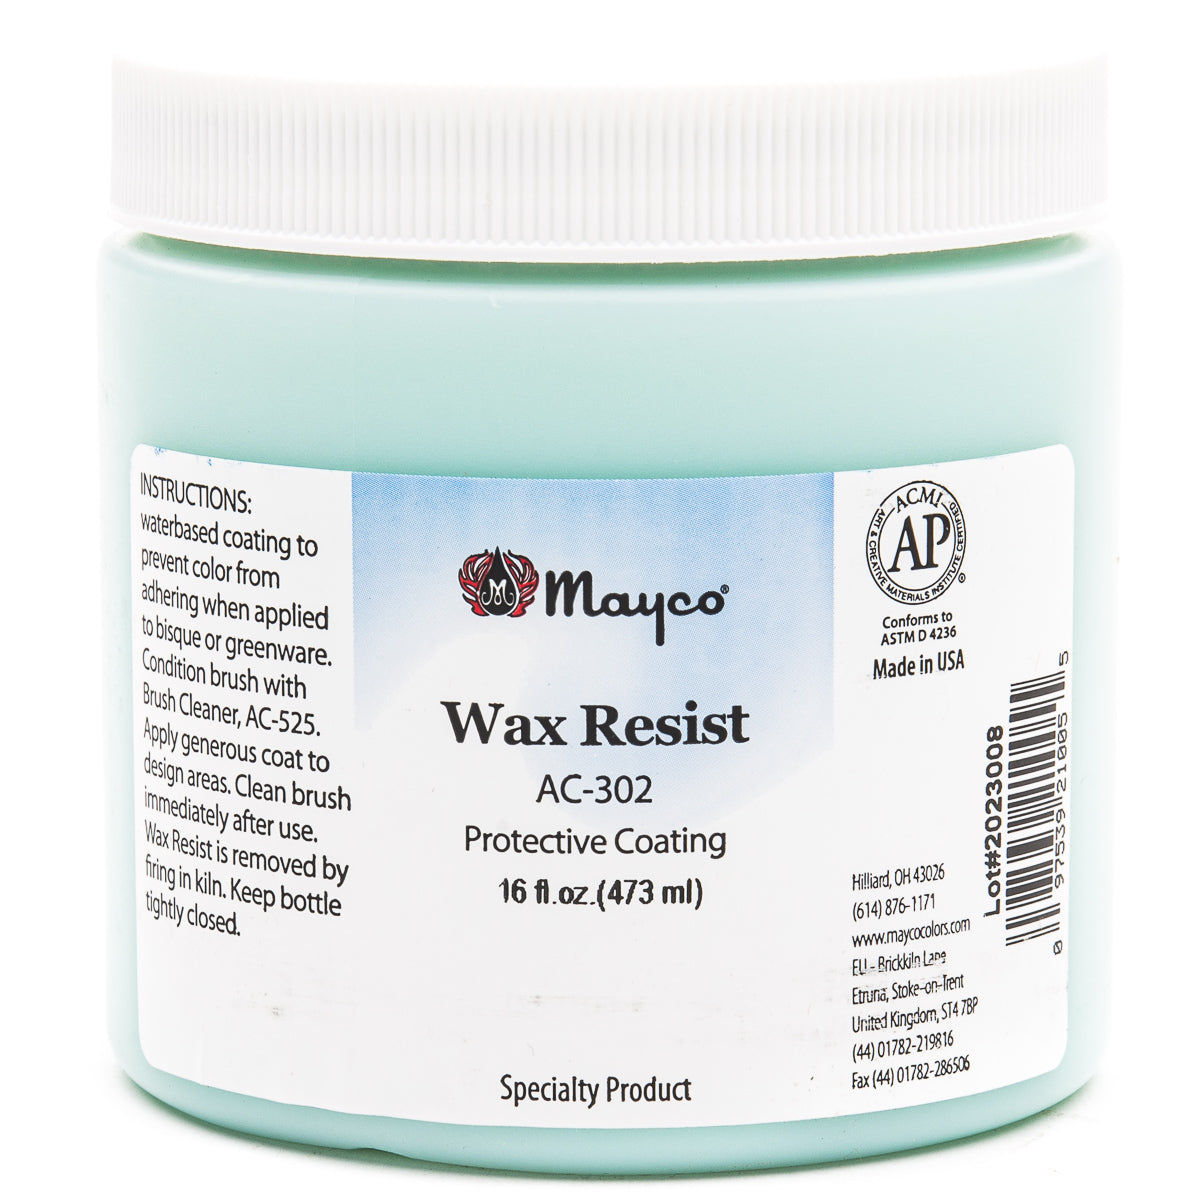 Wax Resist - Mid-South Ceramics